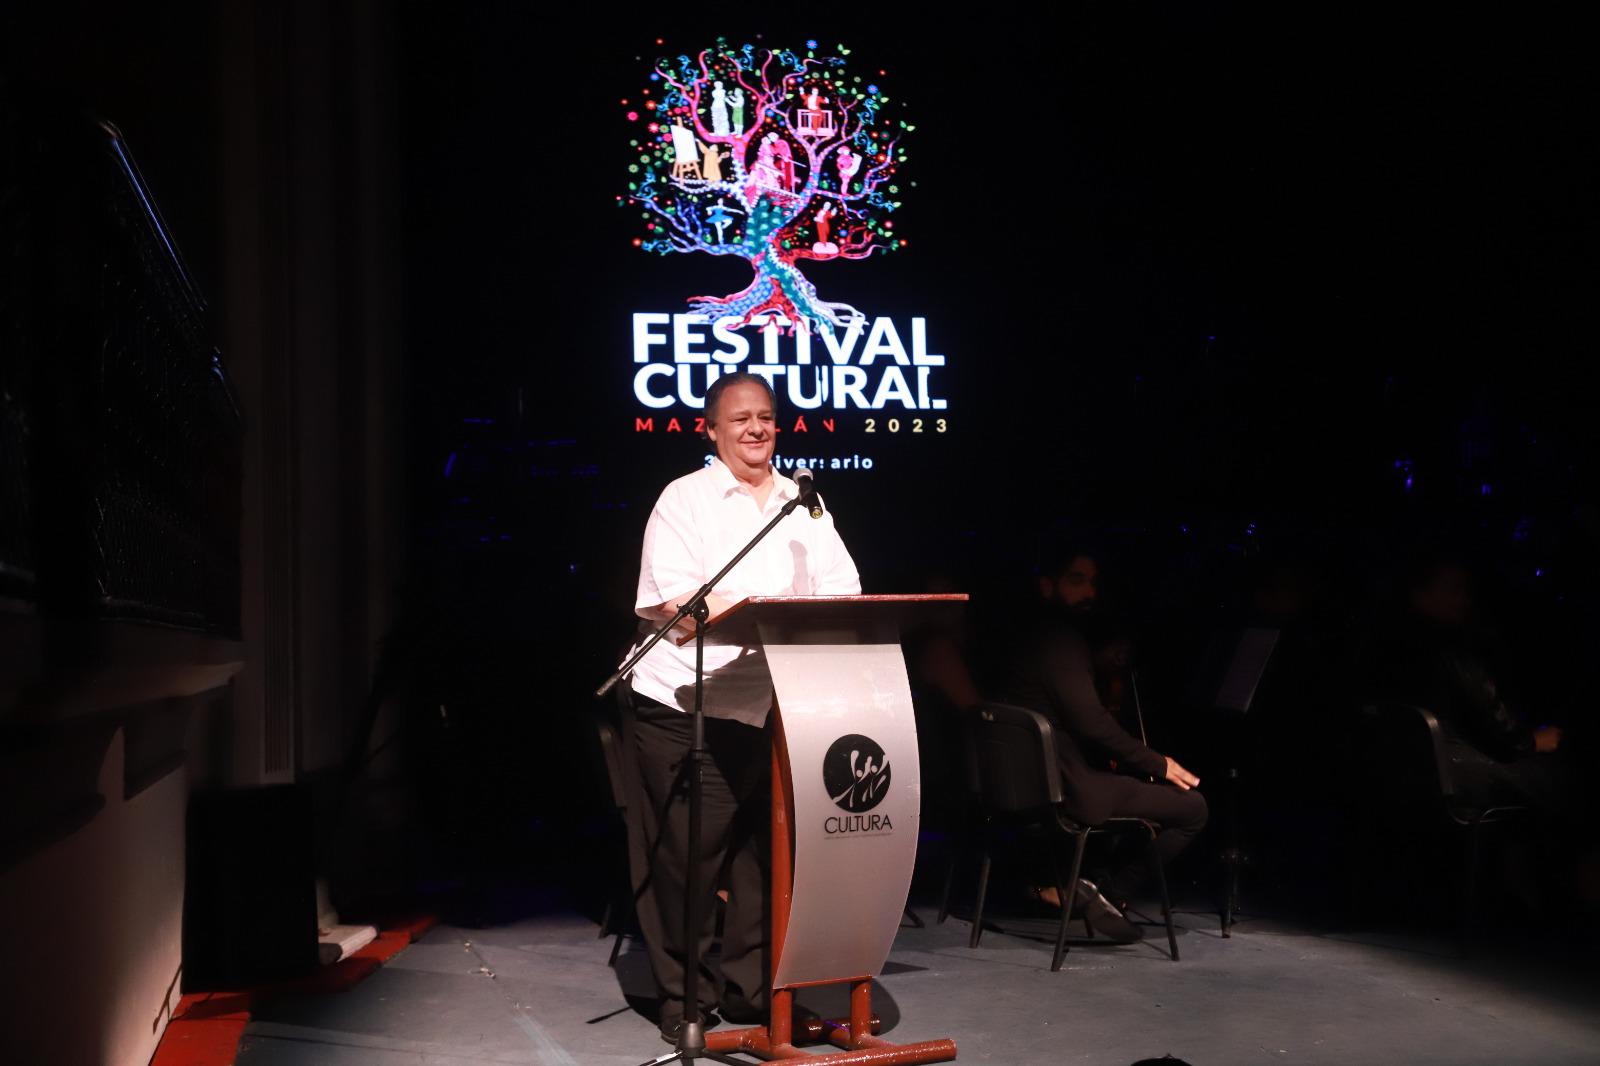 $!Raúl Rico, director del Instituto de Cultura de Mazatlán, da la bienvenida a los asistentes al Festival Cultural Mazatlán 2023.